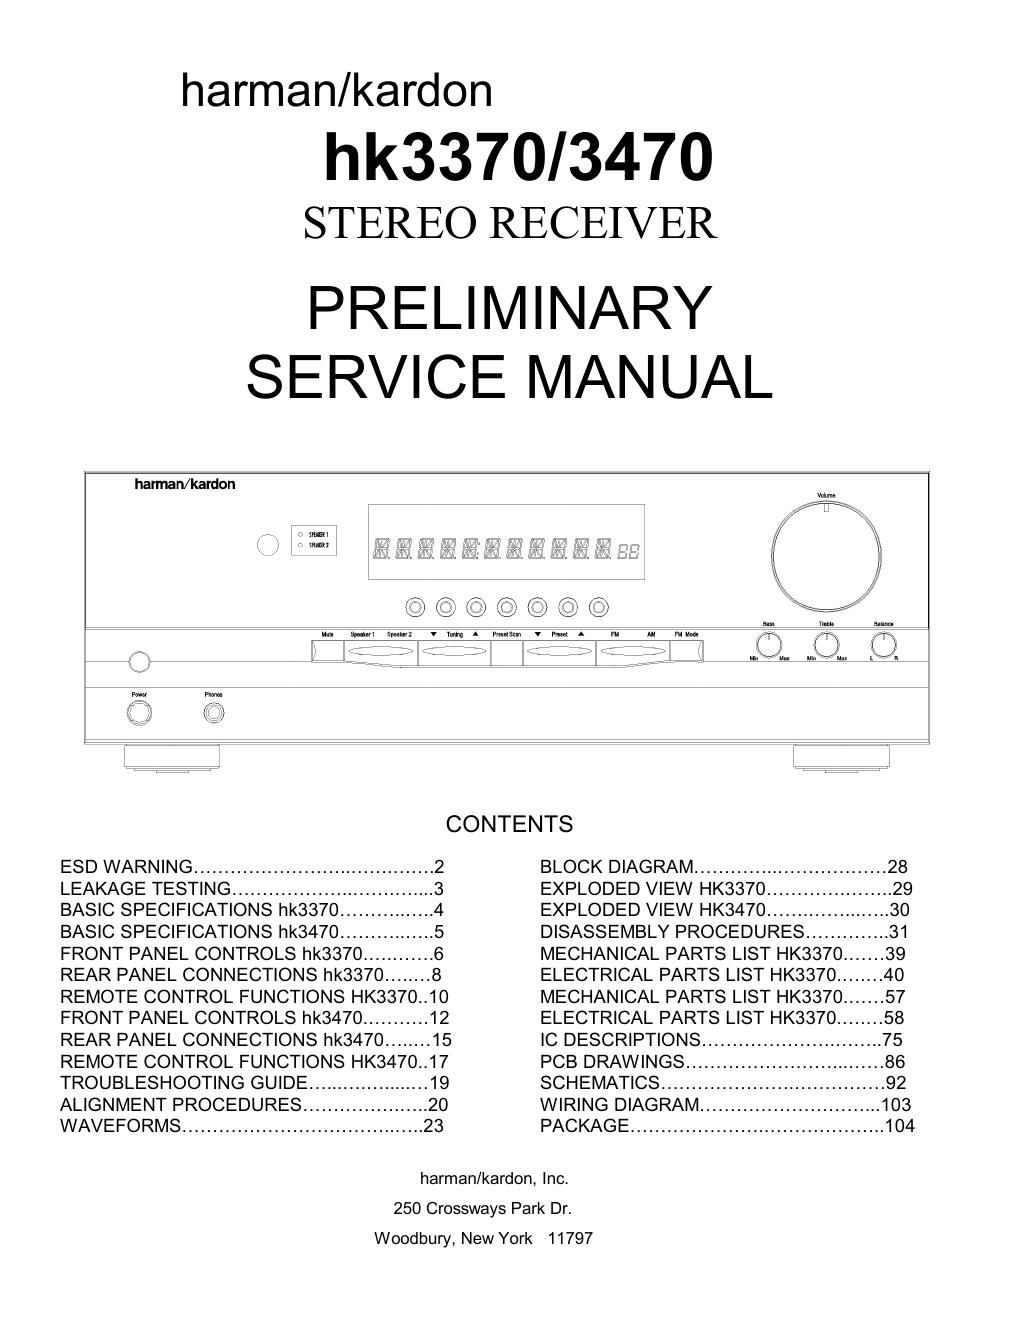 harman kardon hk 3370 service manual 2